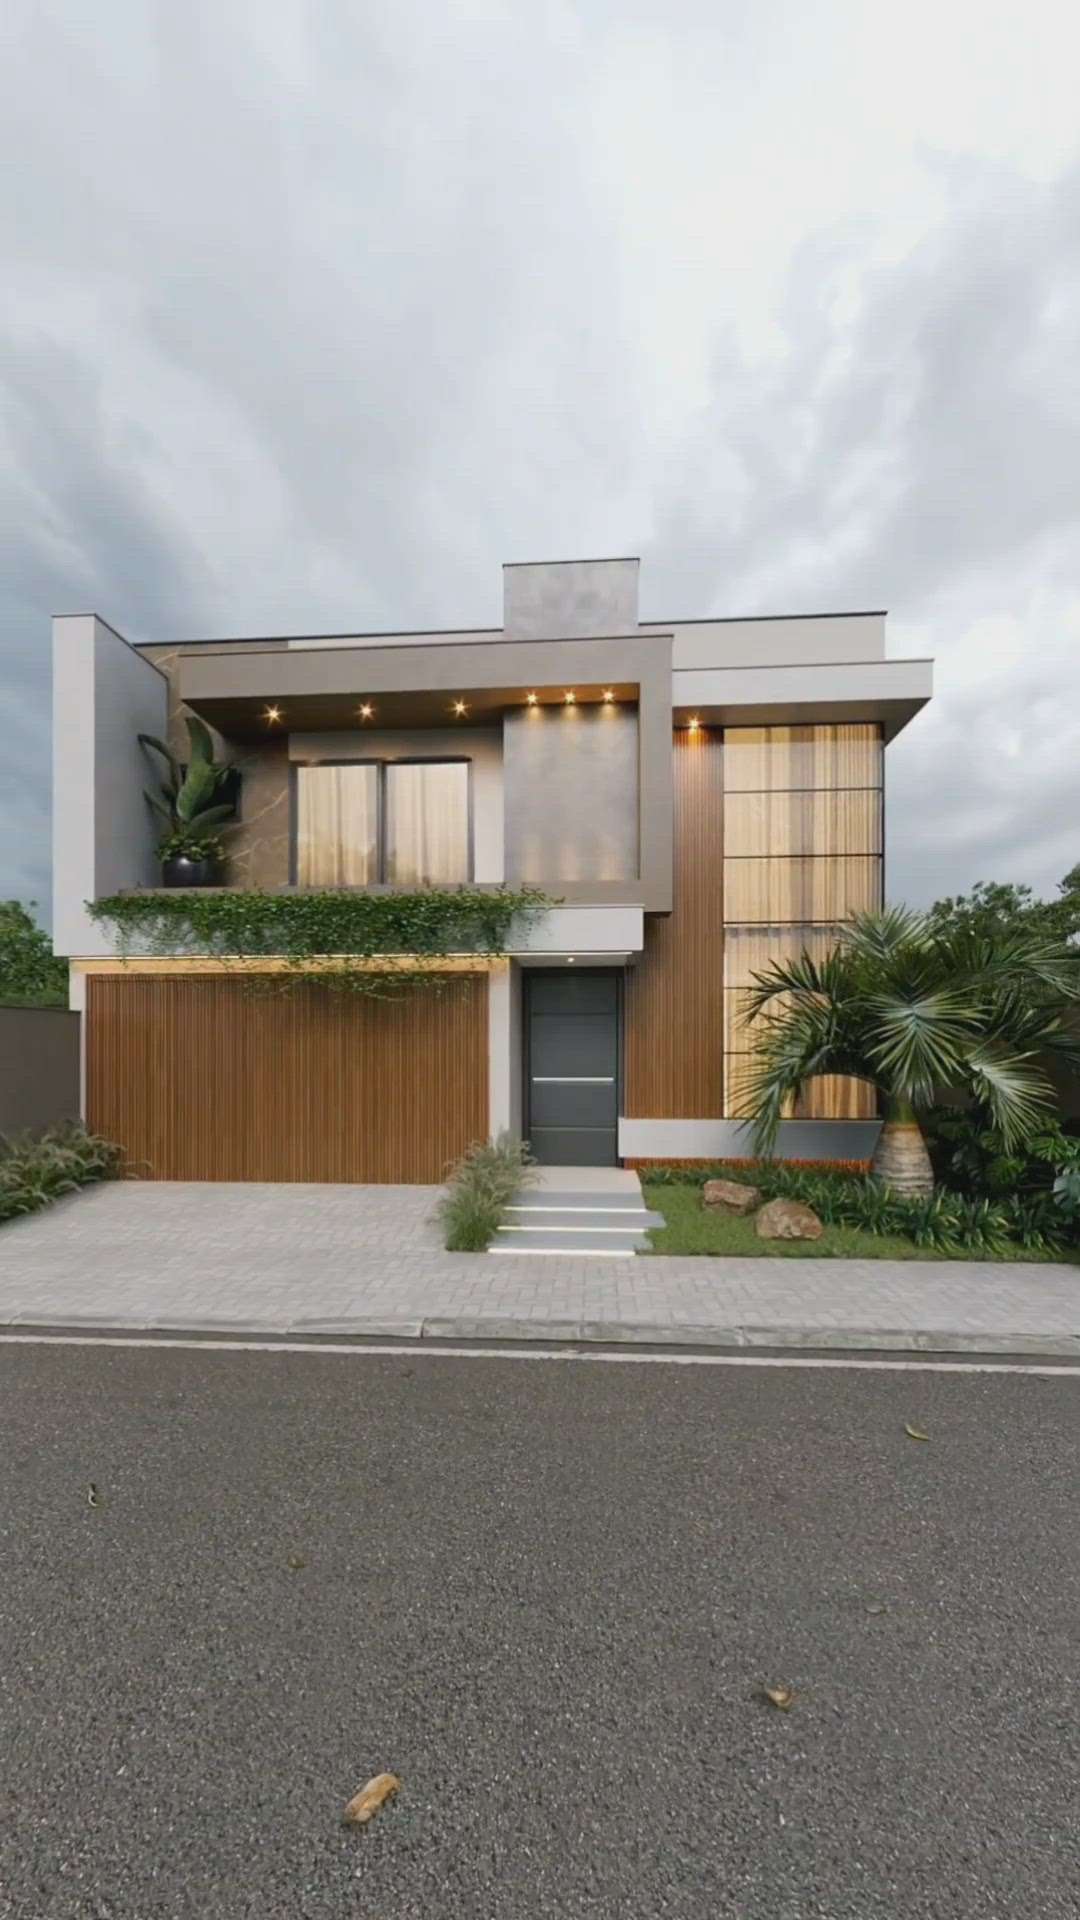 30'x 50'house elevation design